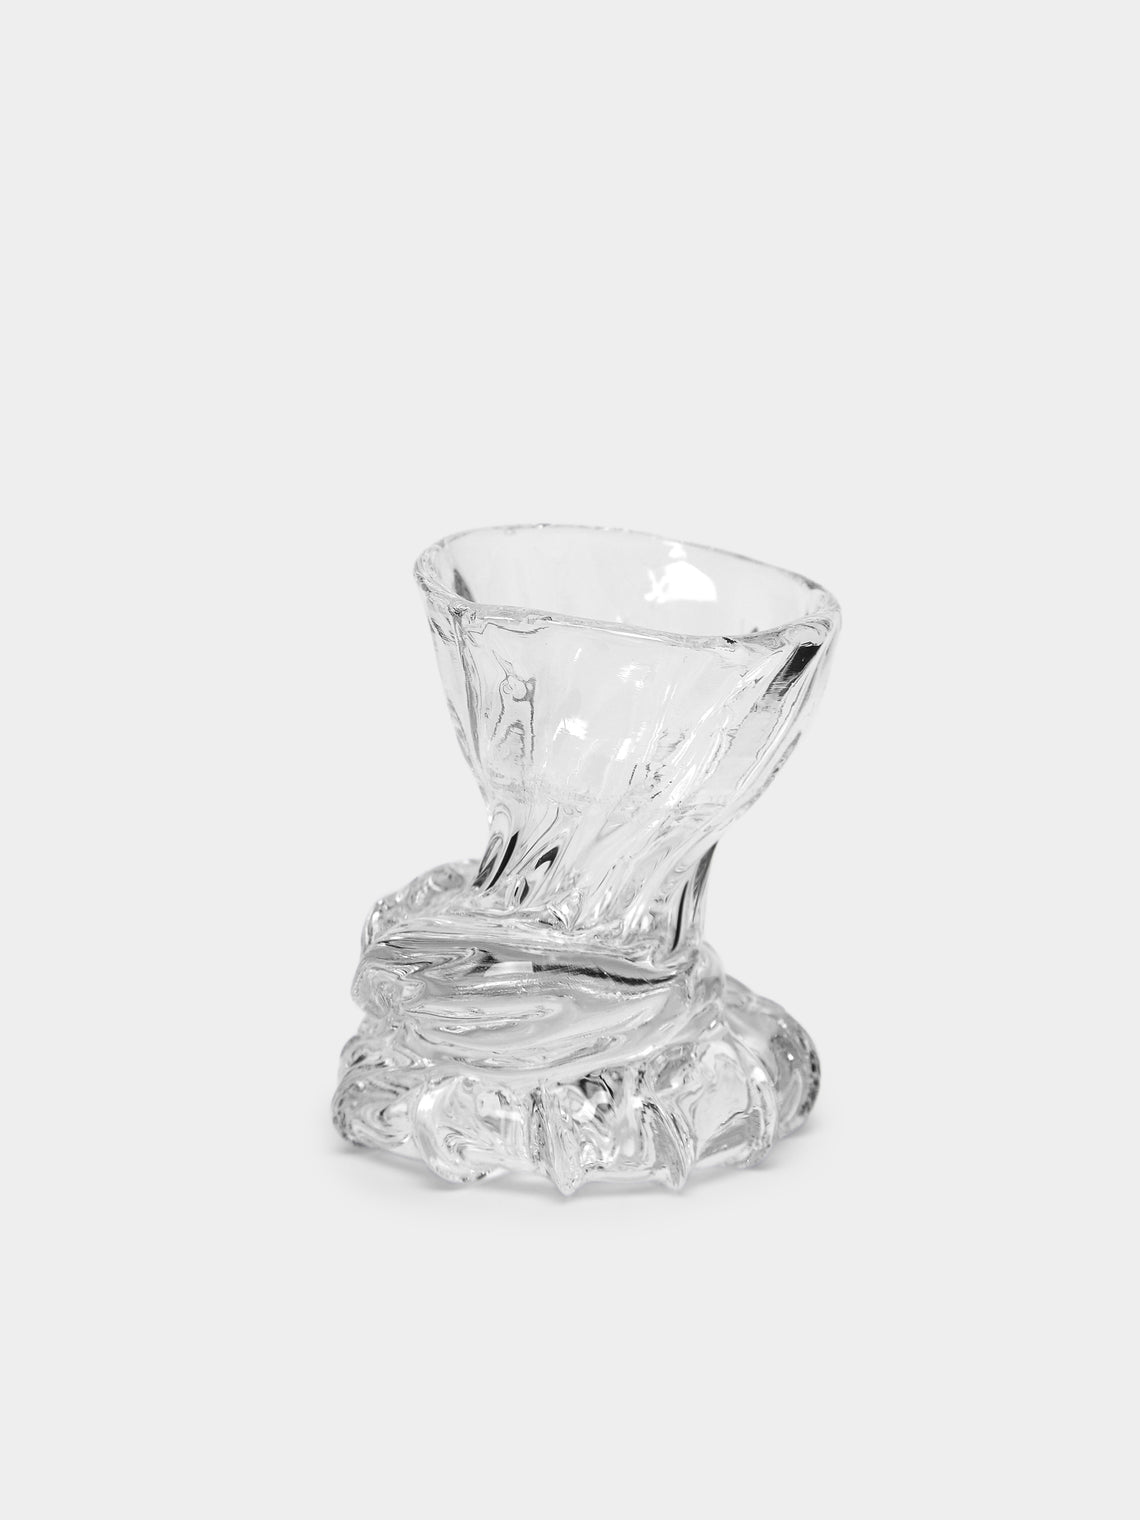 Alexander Kirkeby - Hand-Blown Crystal Egg Cup -  - ABASK - 